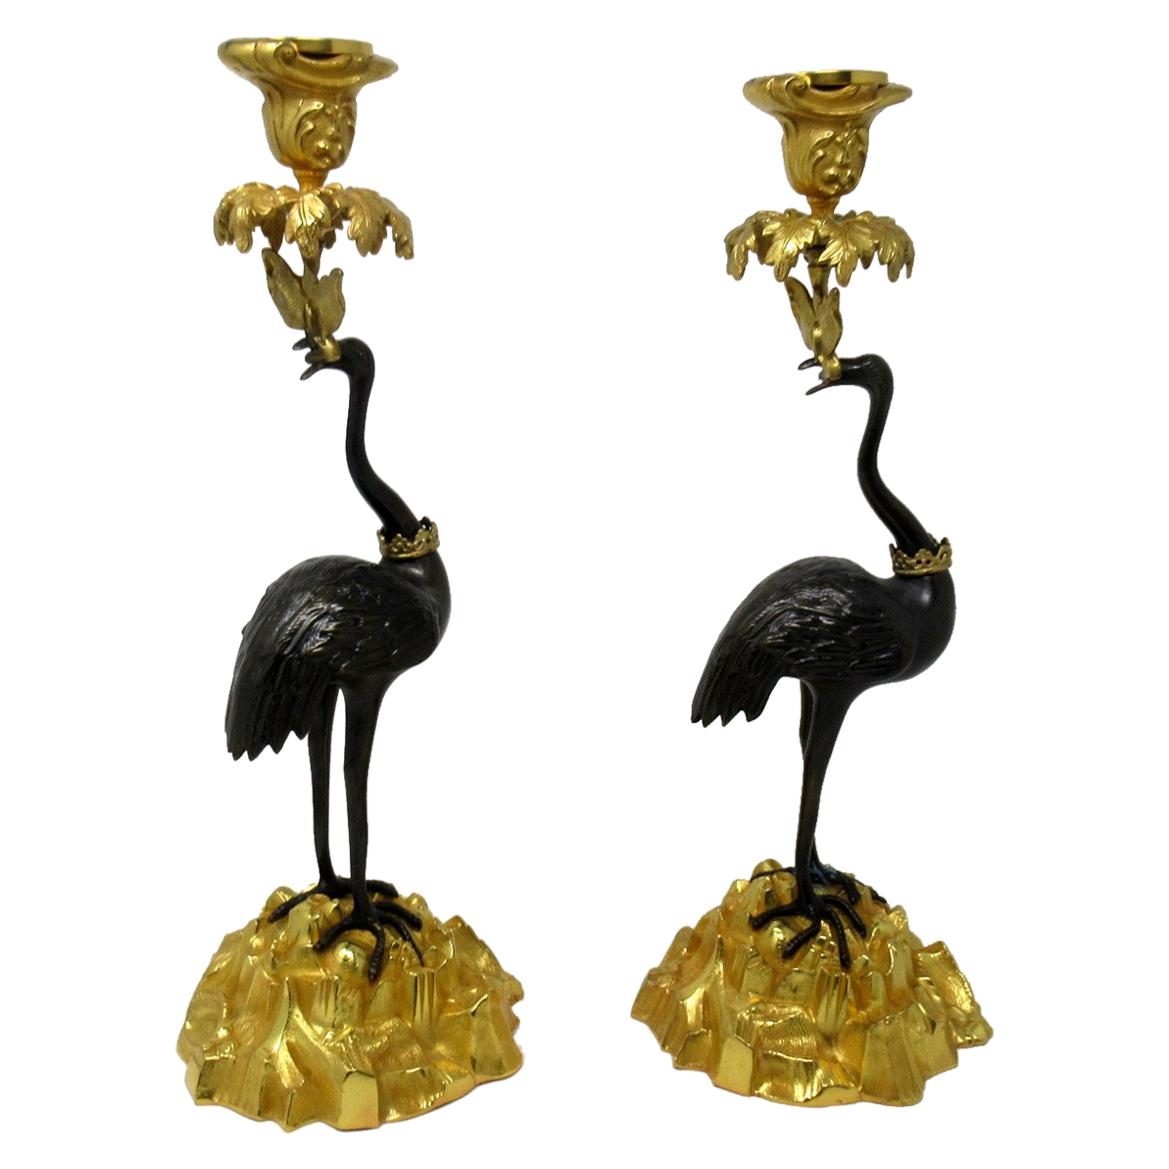 Antique Pair of English Ormolu Gilt Bronze Candlesticks Storks Cranes by Abbott